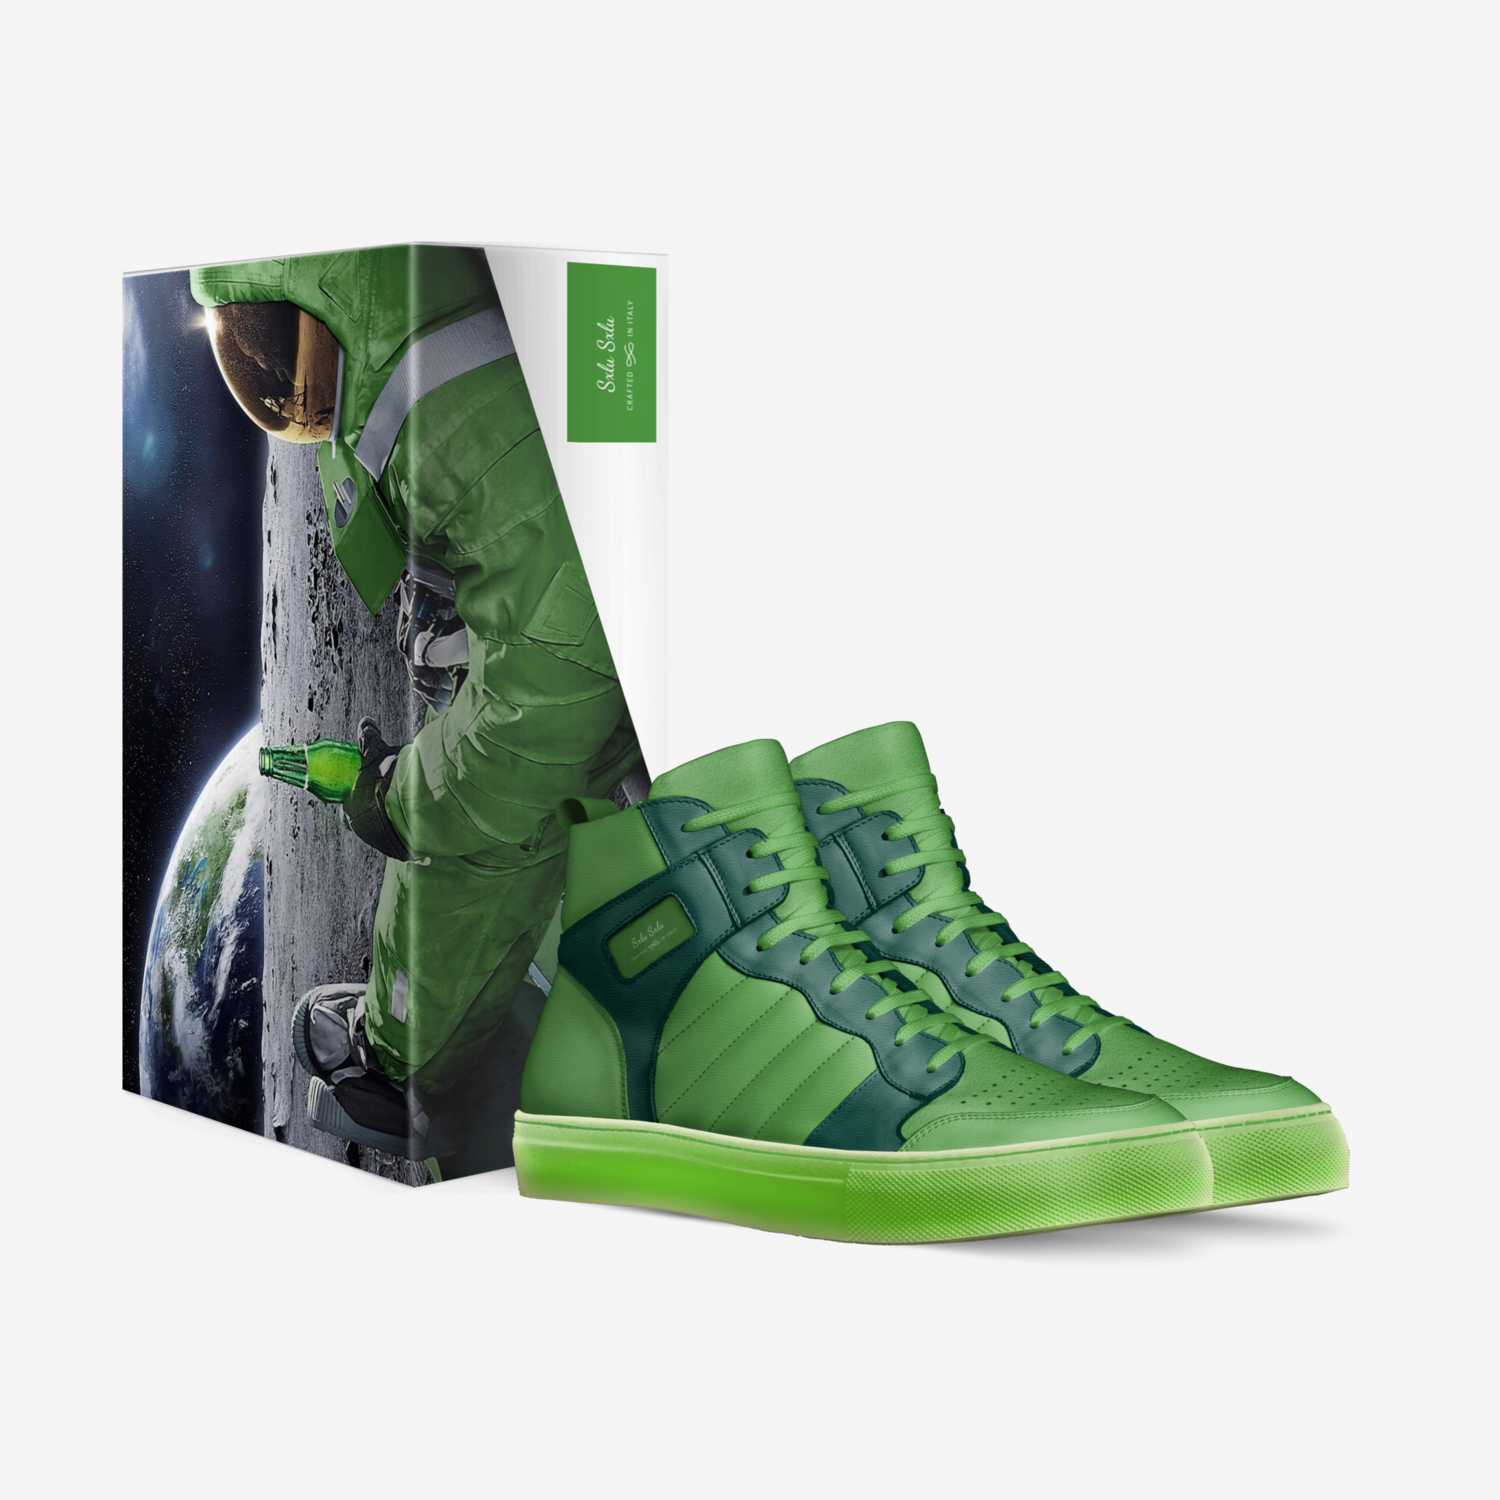 Sxlu Sxlu custom made in Italy shoes by Justin Bryant | Box view